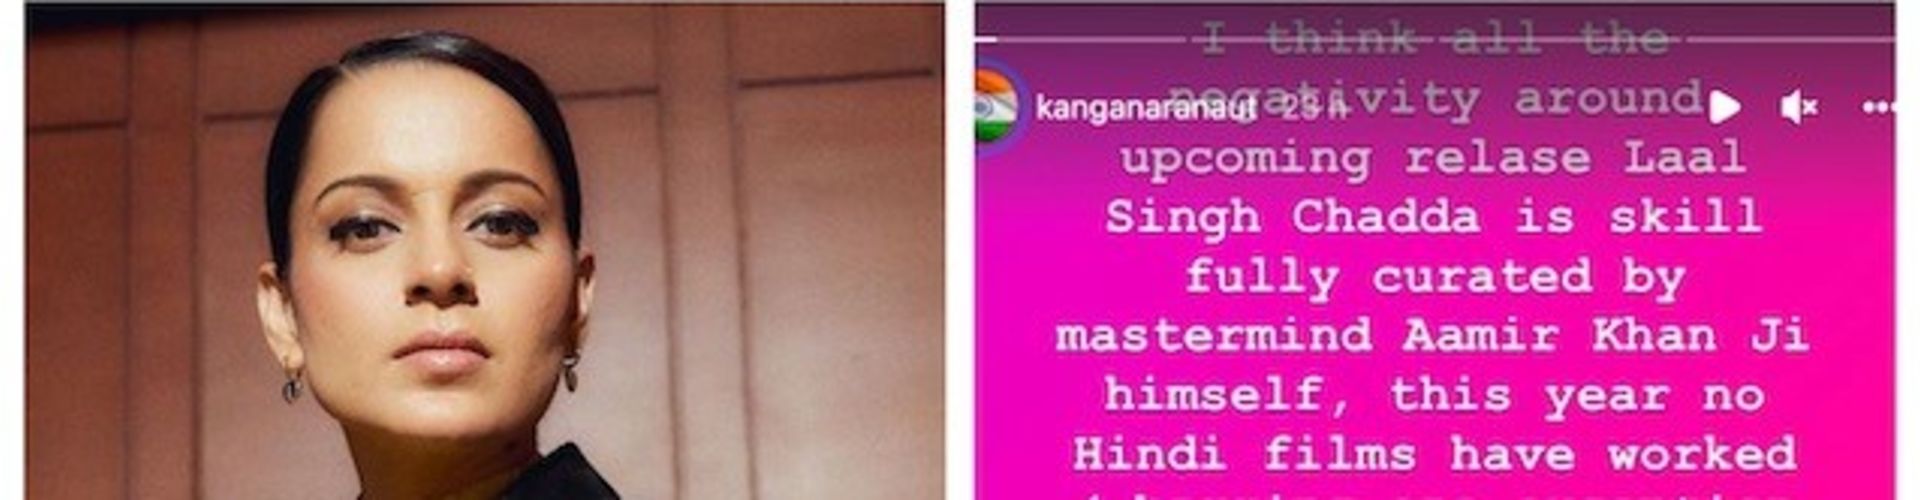 Aamir Khan Is The Mastermind Behind Negativity Around Laal Singh Chaddha Says Kangana Ranaut